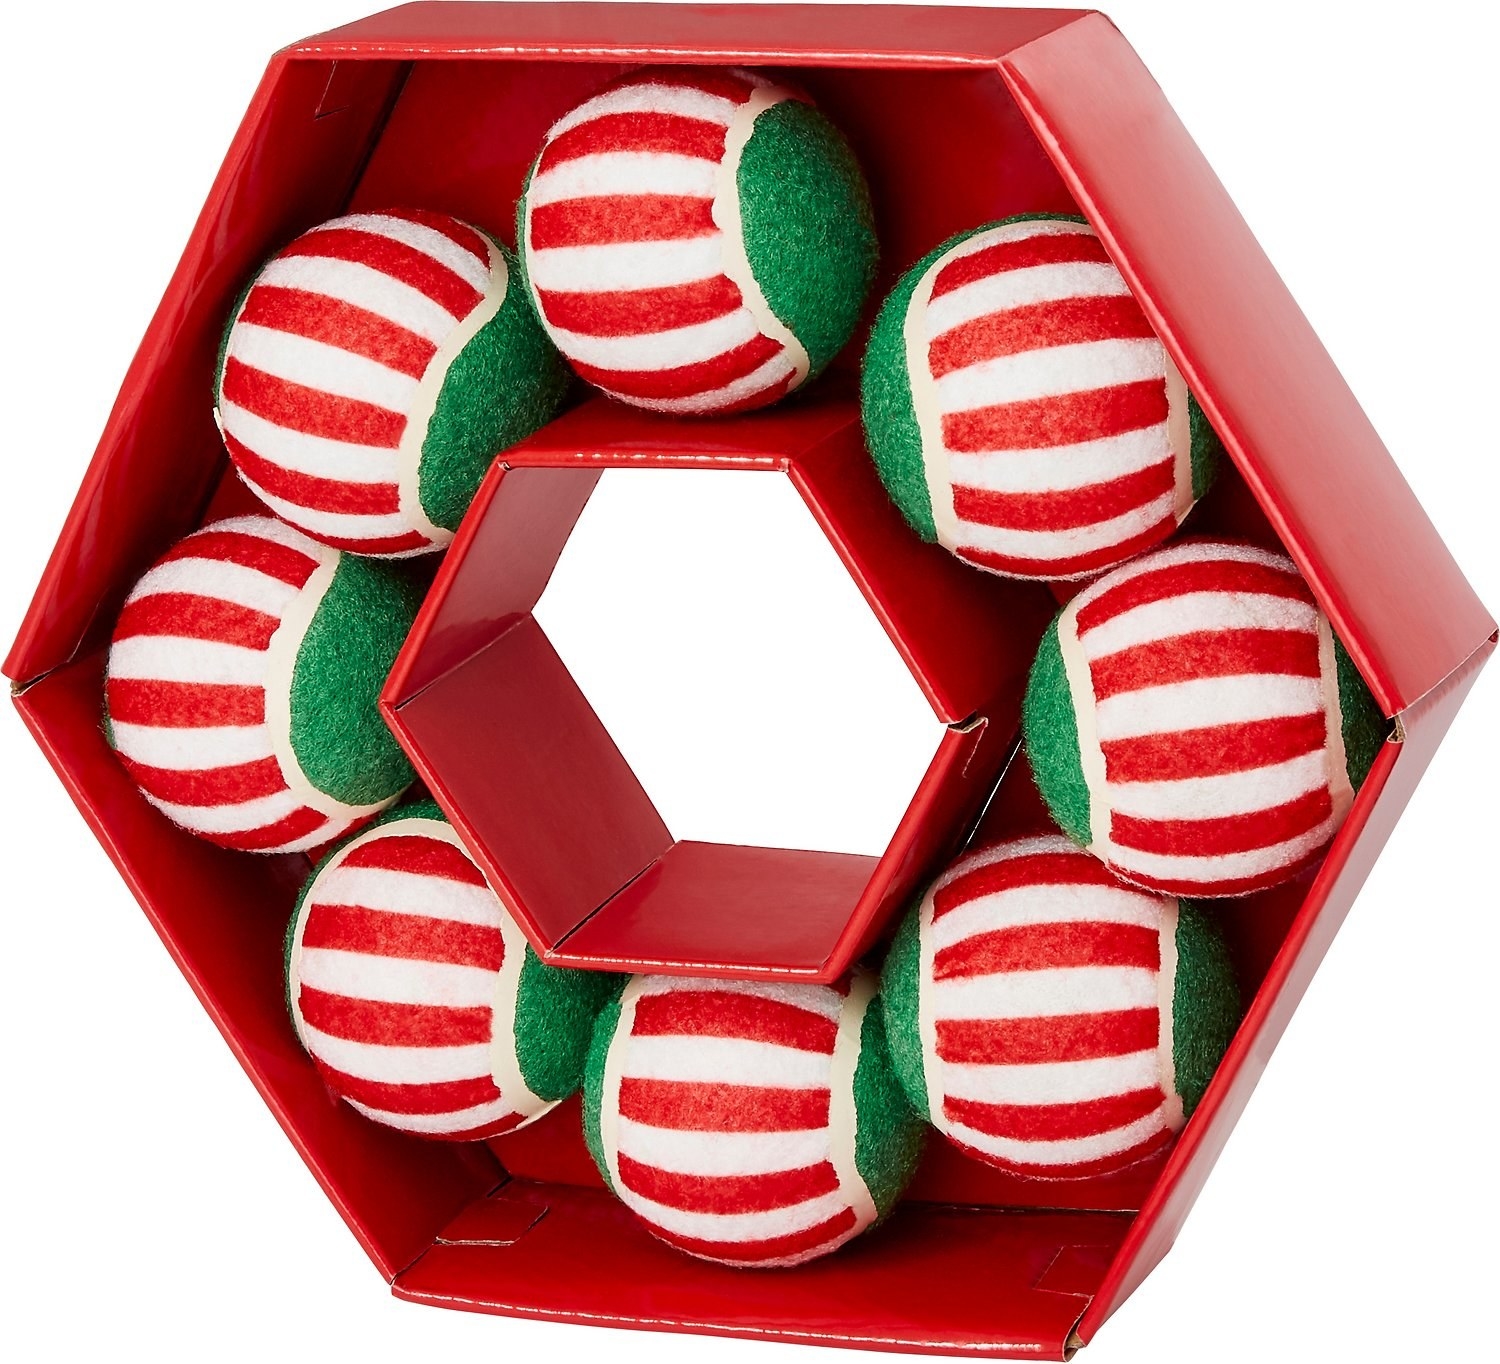 Eight tennis balls set in a cardboard wreath.